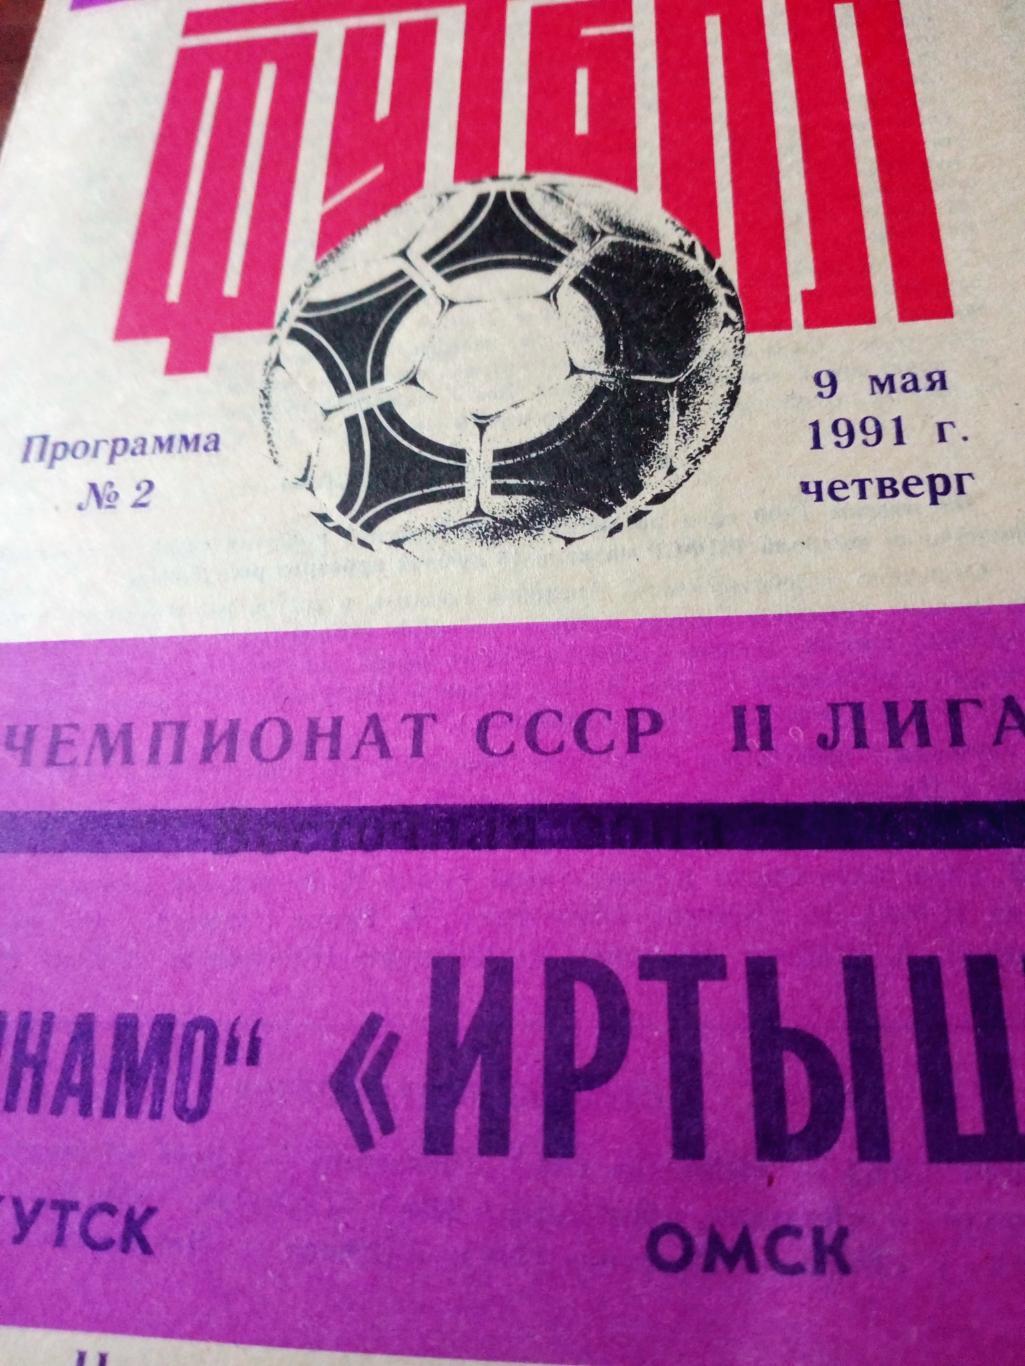 Иртыш Омск - Динамо Якутск. 9 мая 1991 год